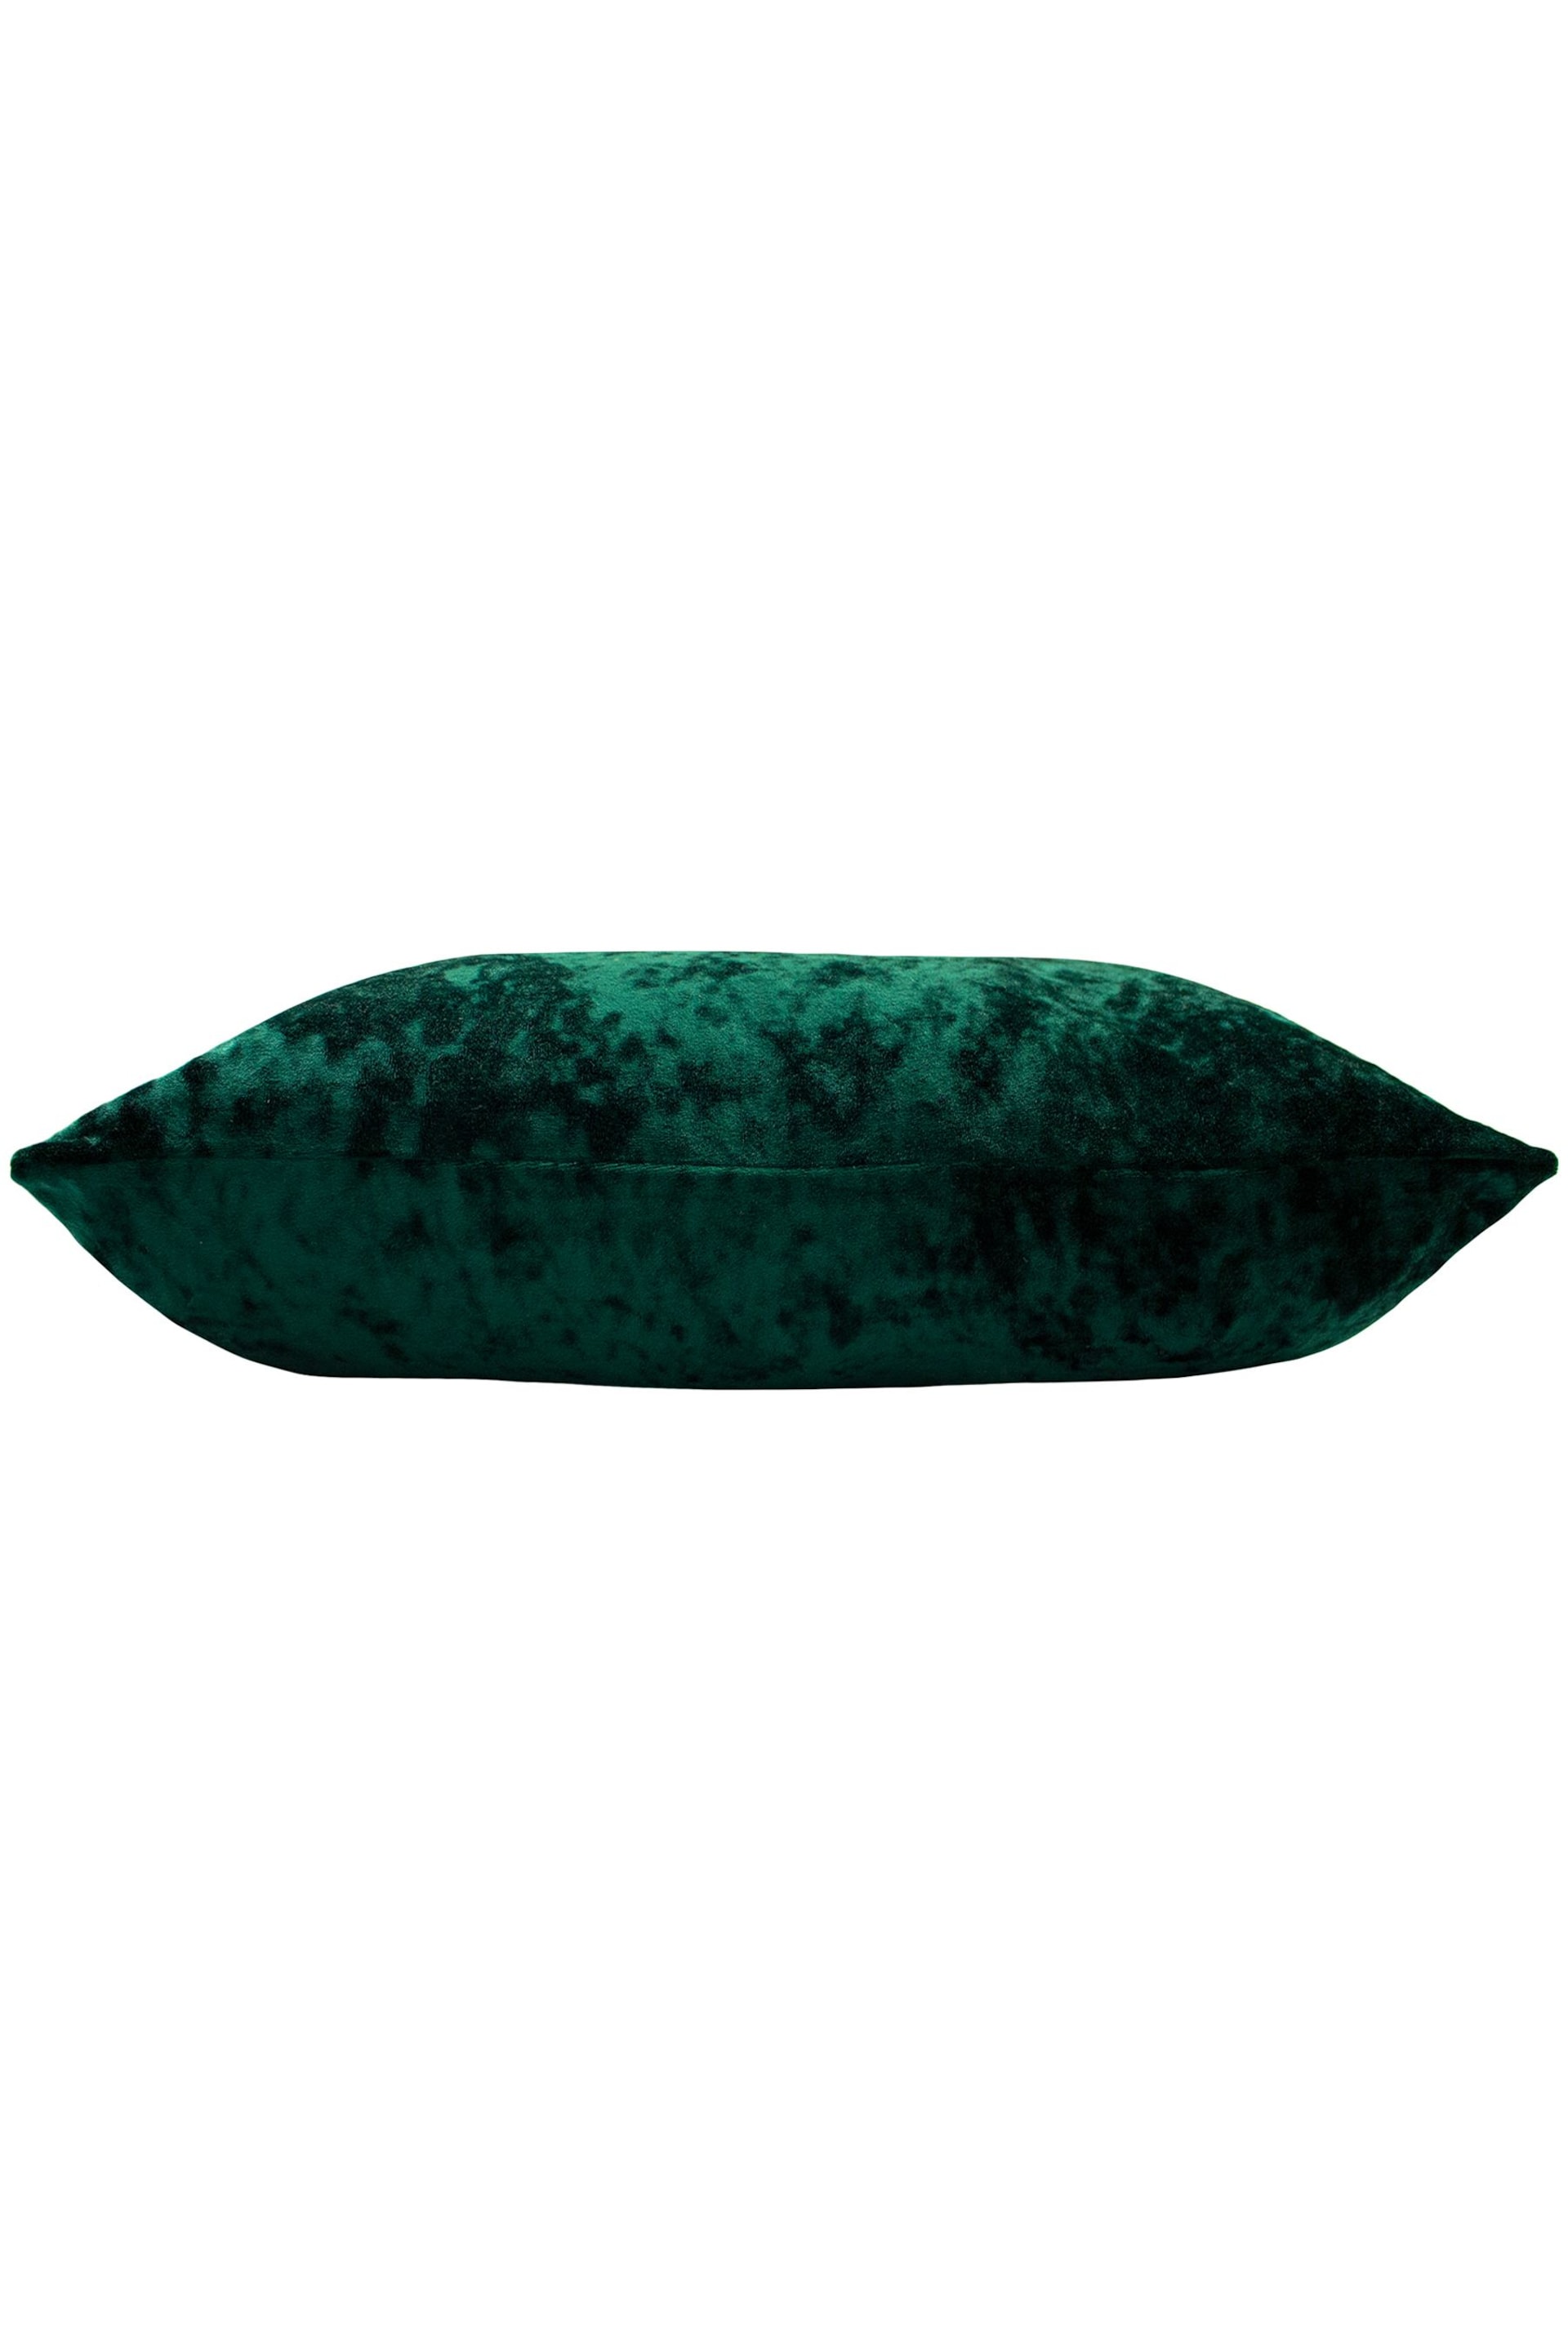 Riva Paoletti Emerald Green Verona Crushed Velvet Rectangular Polyester Filled Cushion - Image 2 of 2